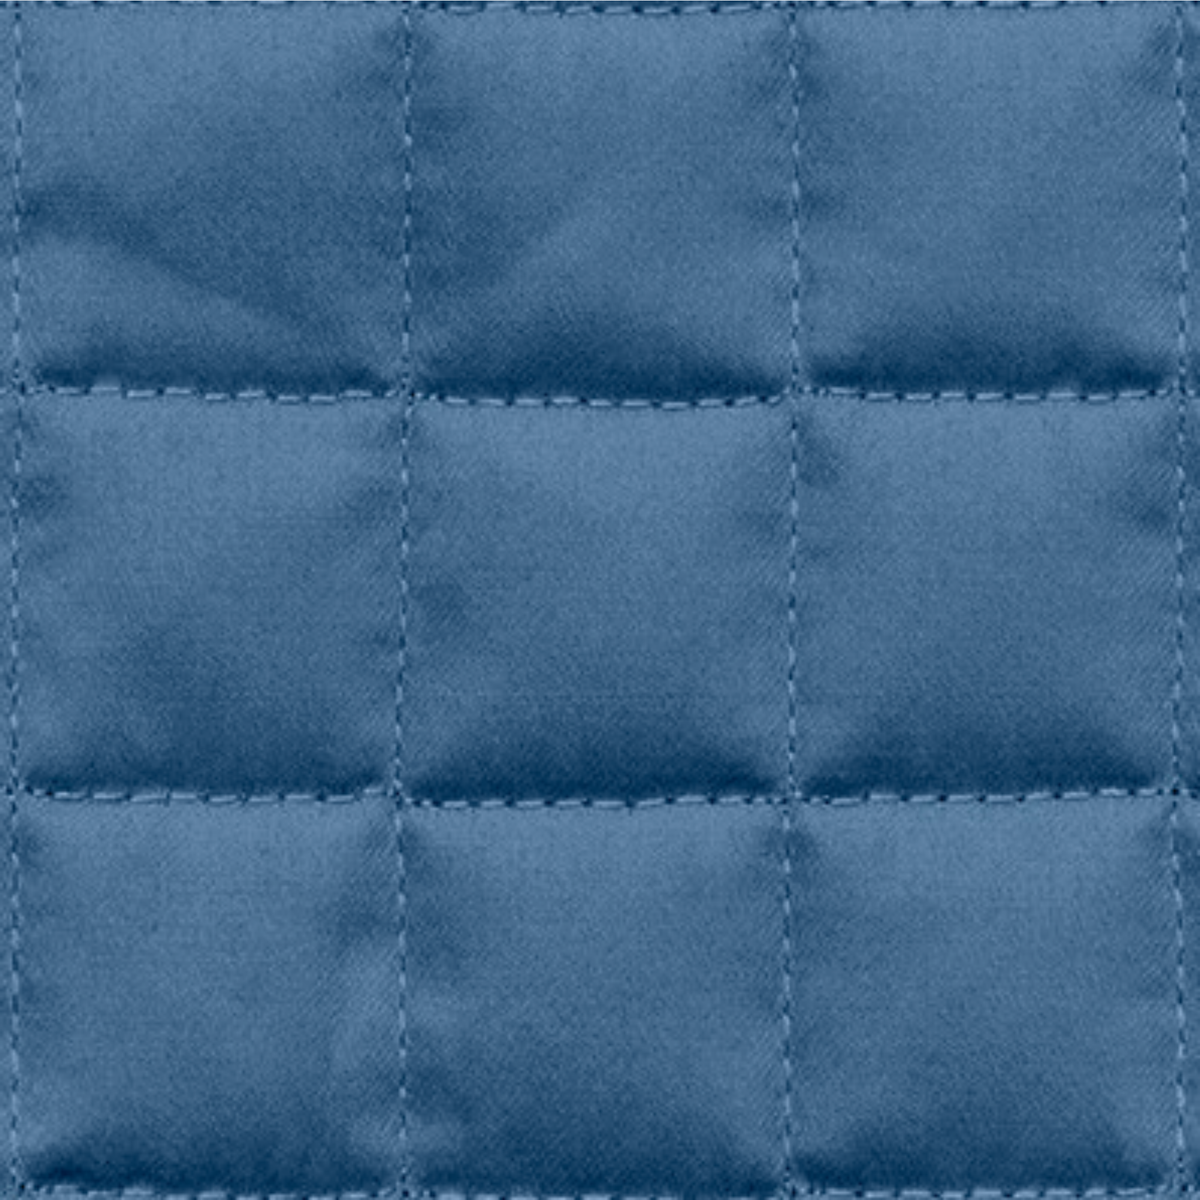 Fabric Closeup of Signoria Masaccio Bedding in Airforce Blue Color